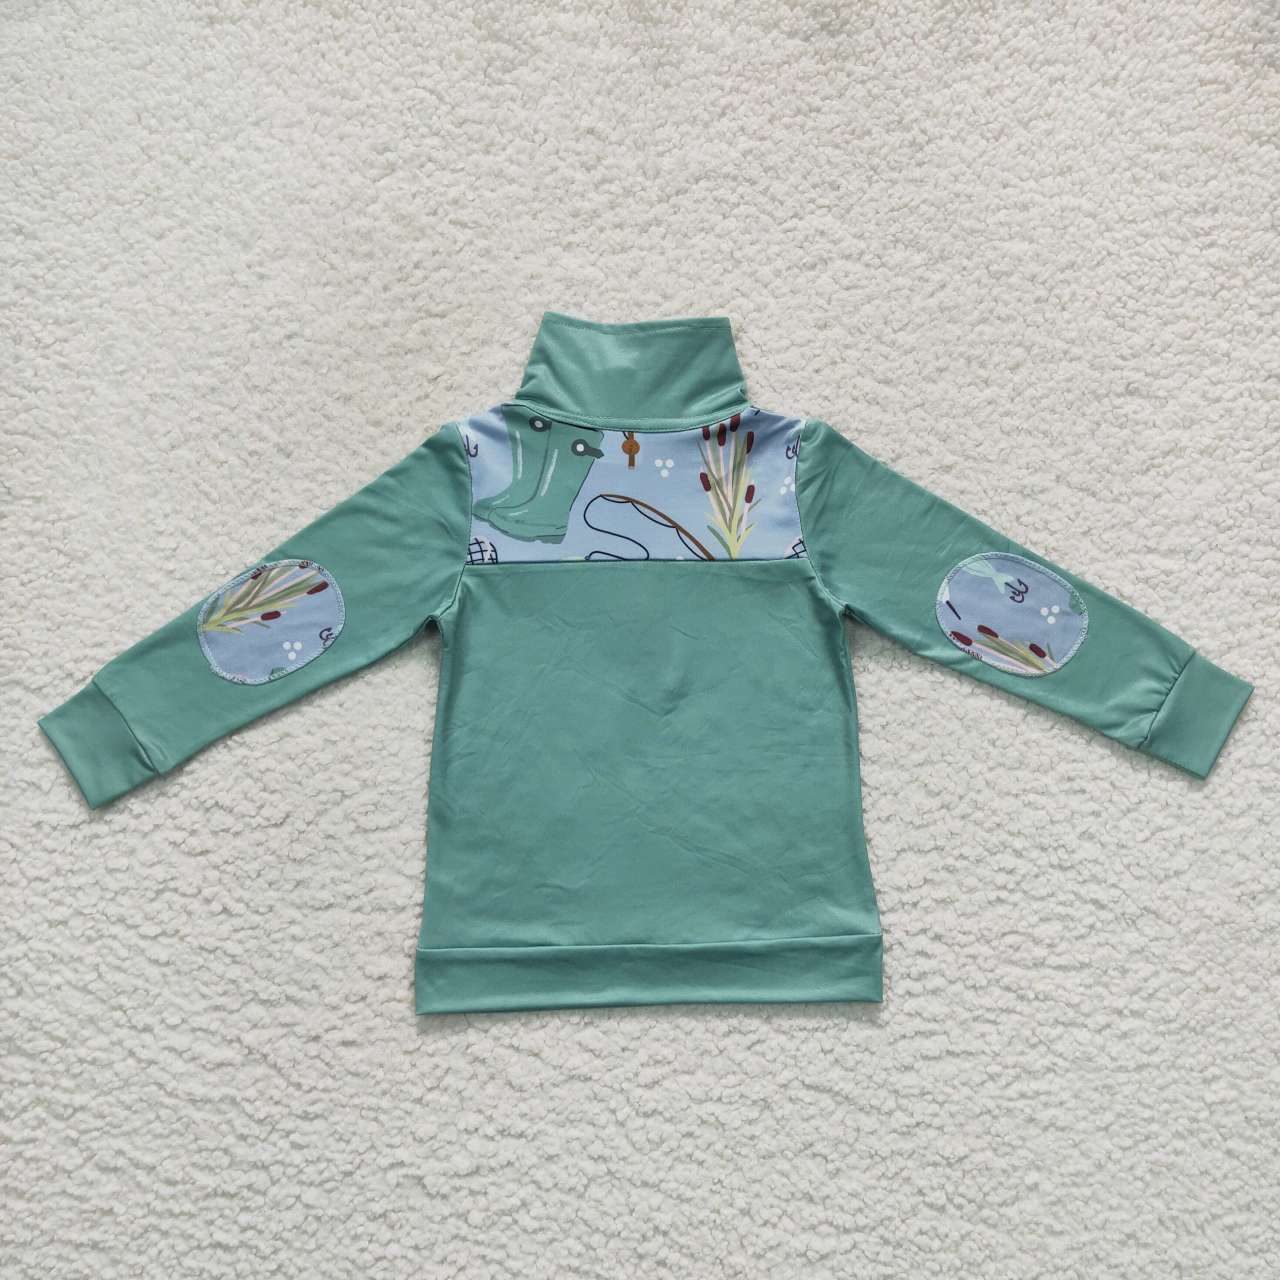 BT0335  Go fishing print boys pullover zipper tee shirt top